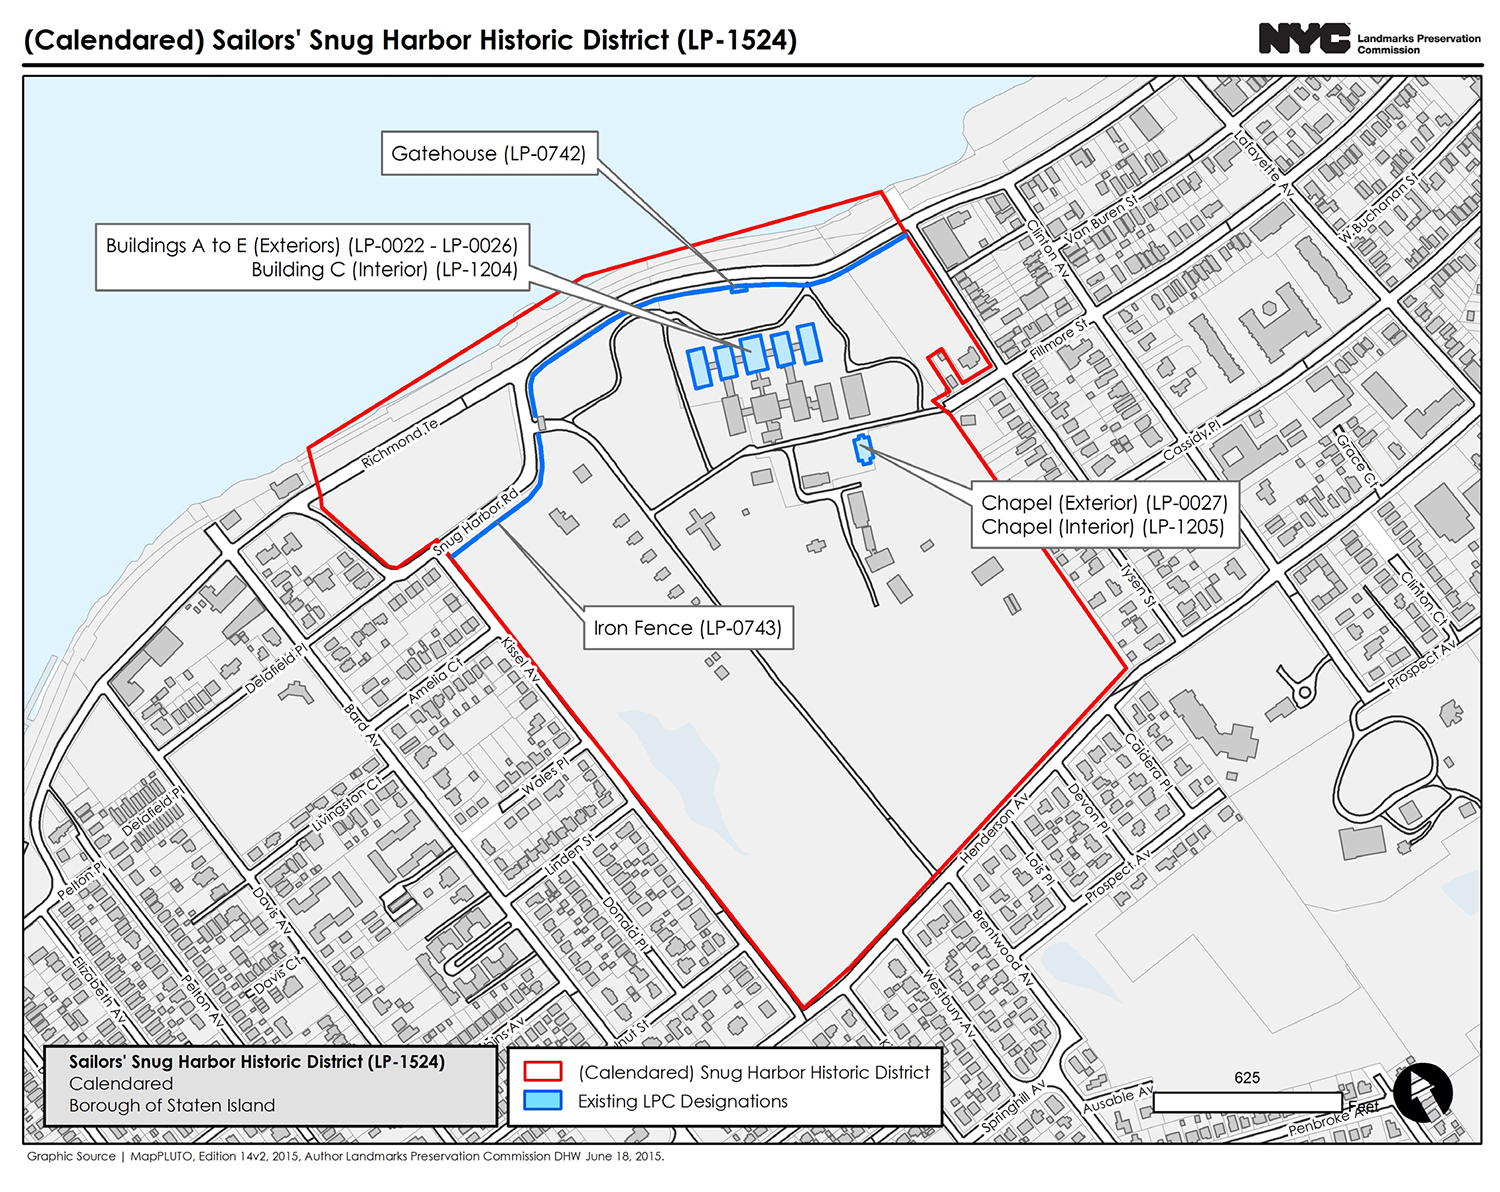 Proposed Sailors' Snug Harbor Historic District